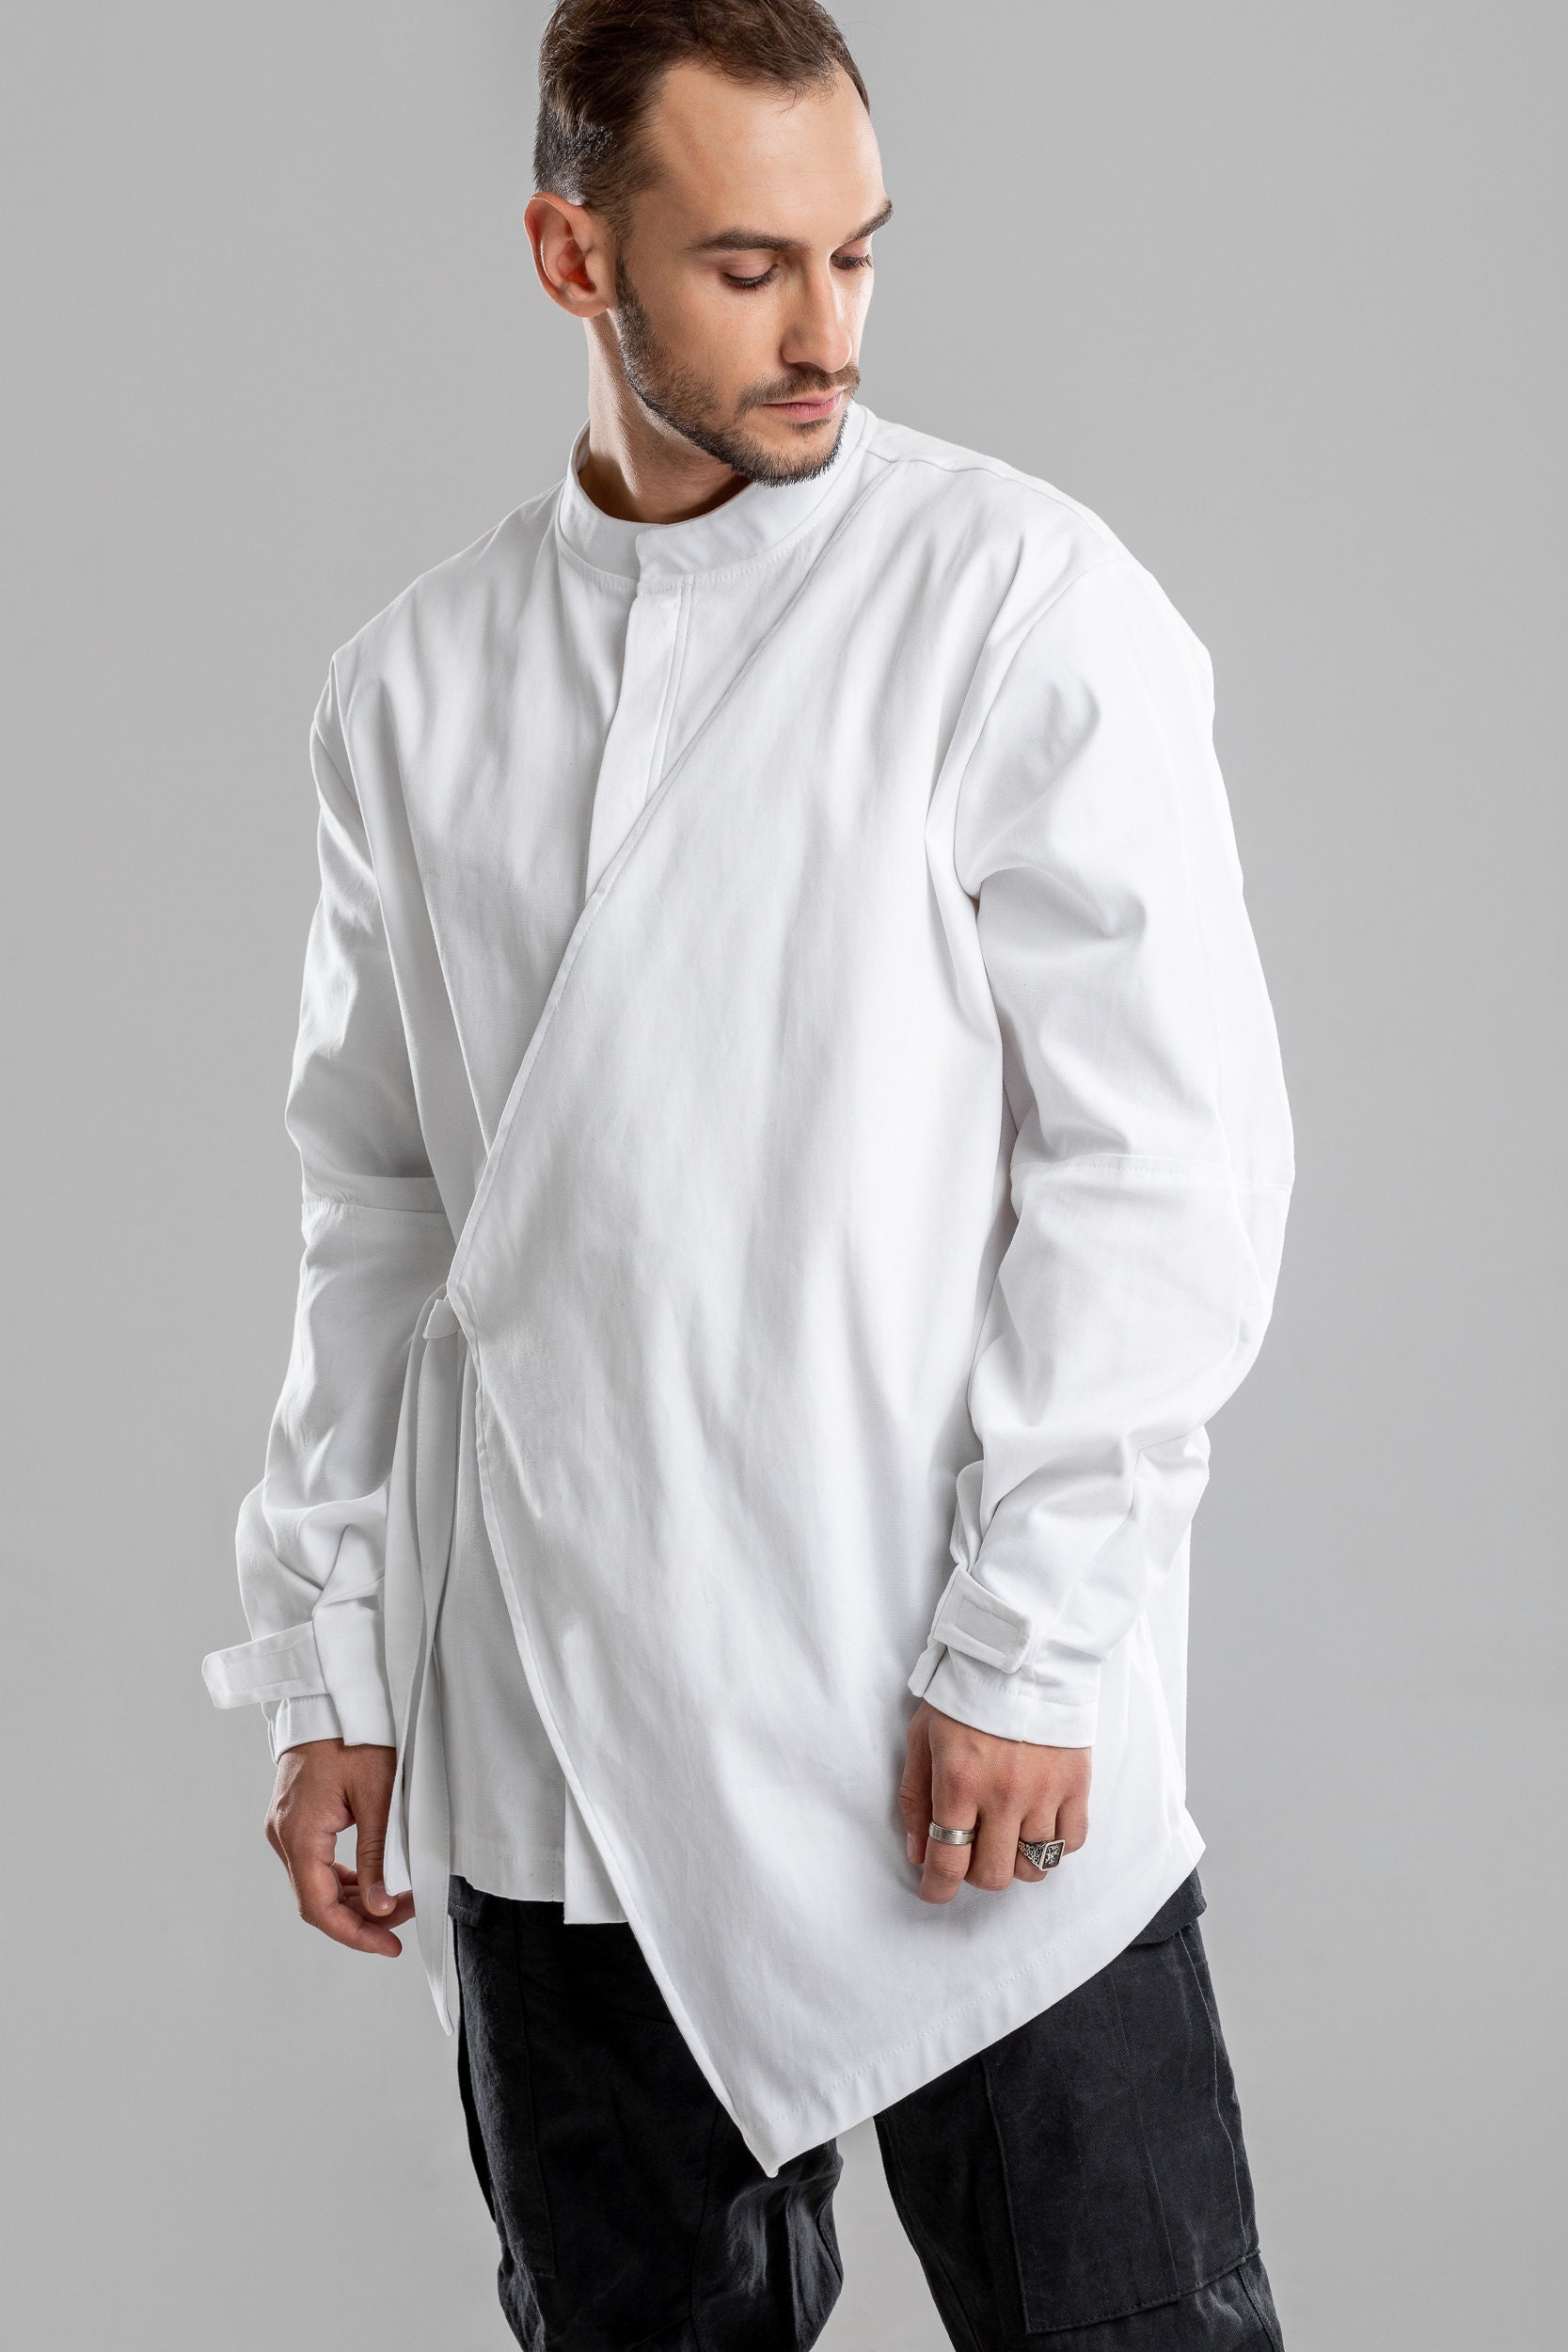 White asymmetric shirt men kimono cardigan casual urban | Etsy